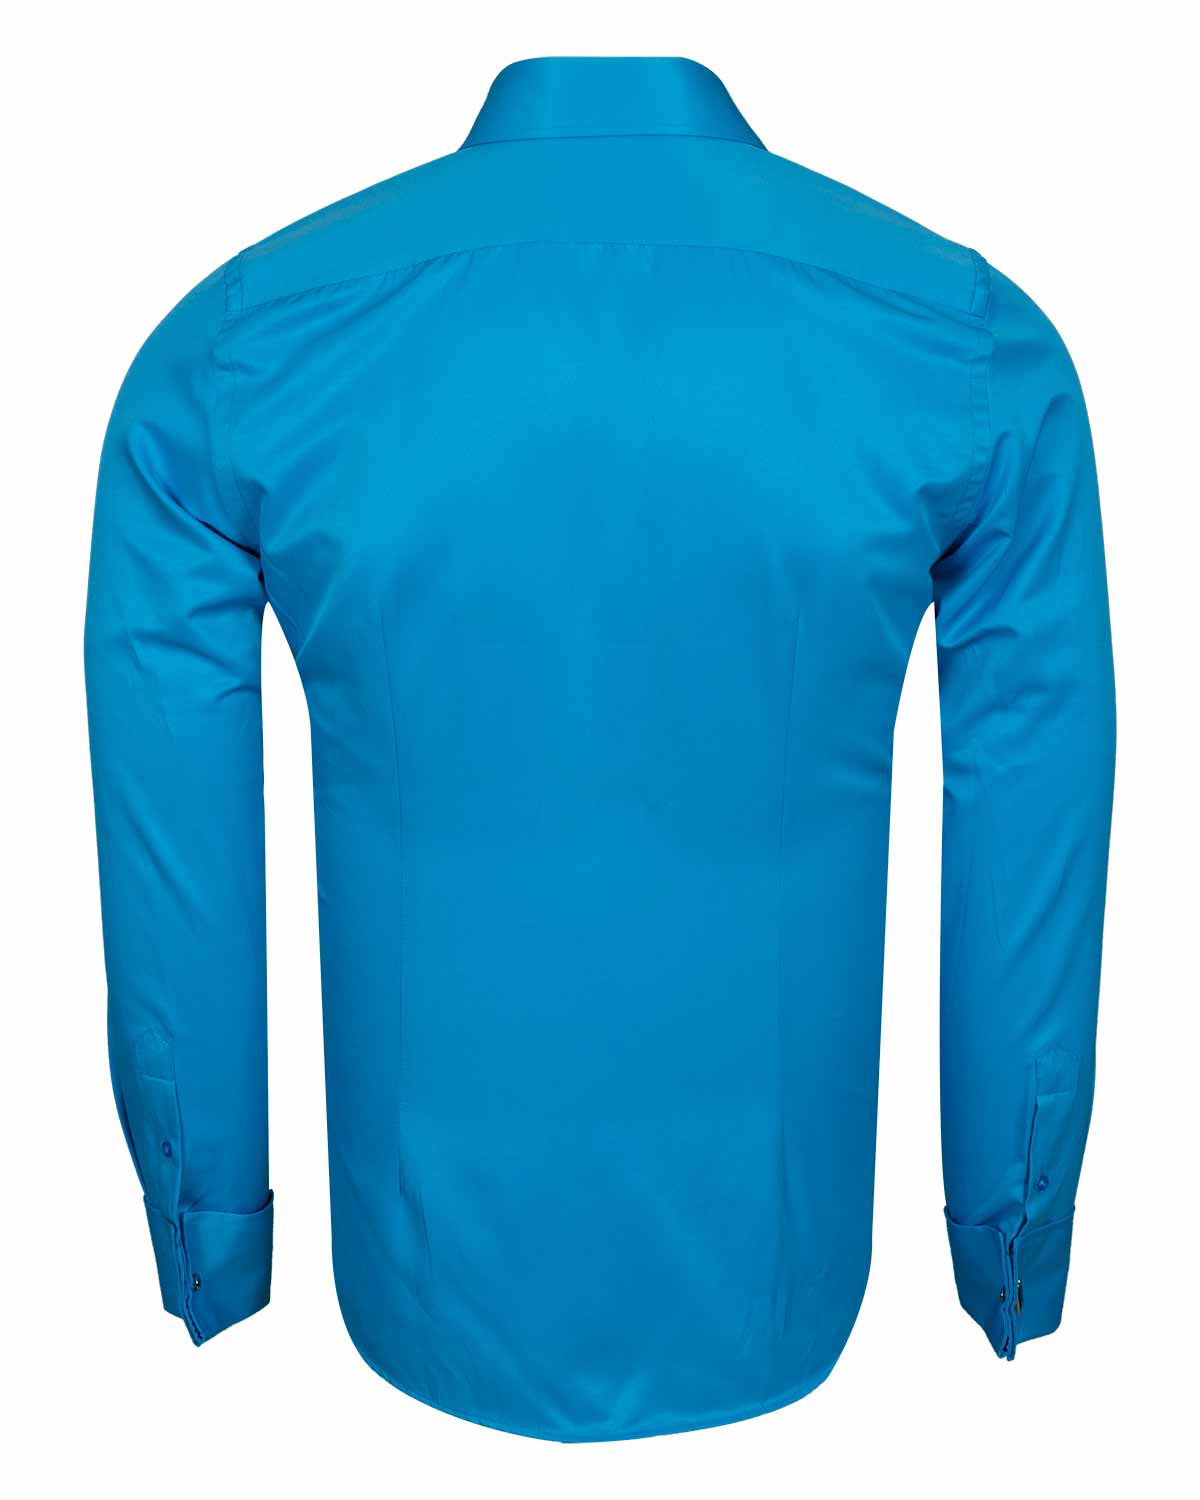 Turquoise Plain Double Cuff Shirt